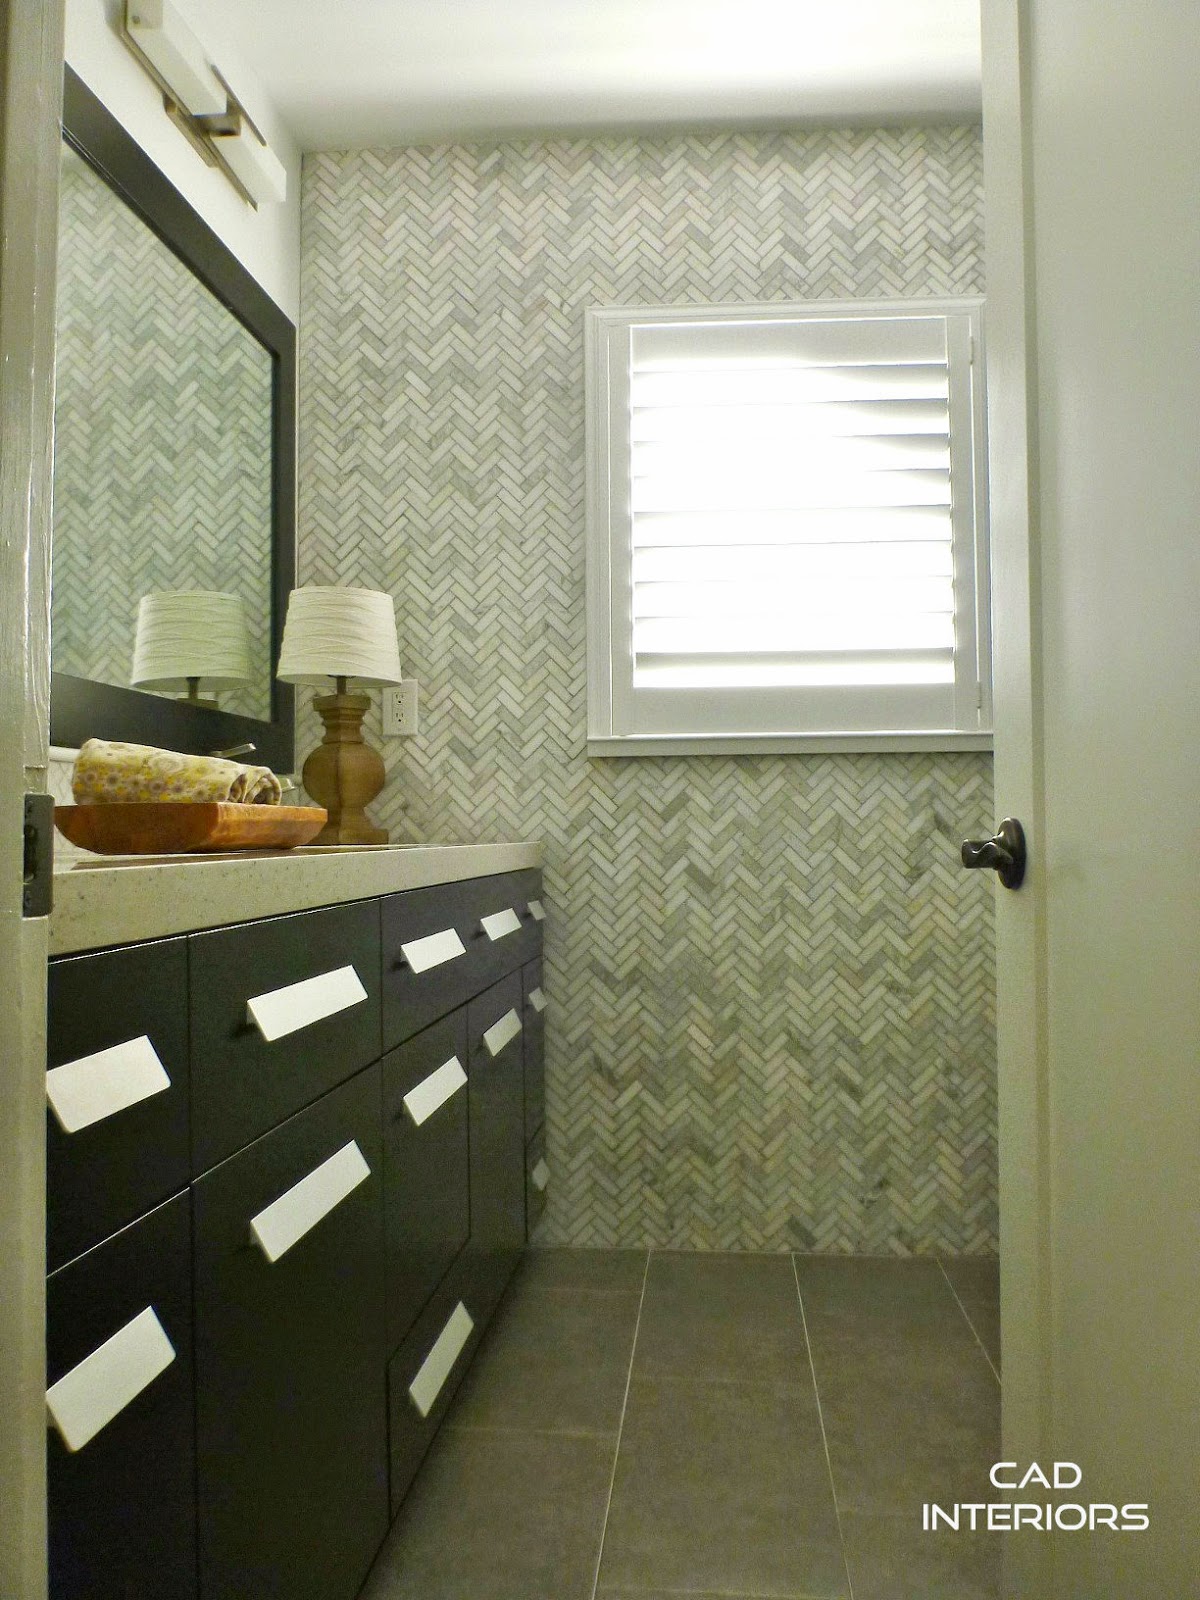 classic modern bathroom design renovation interior design transitional